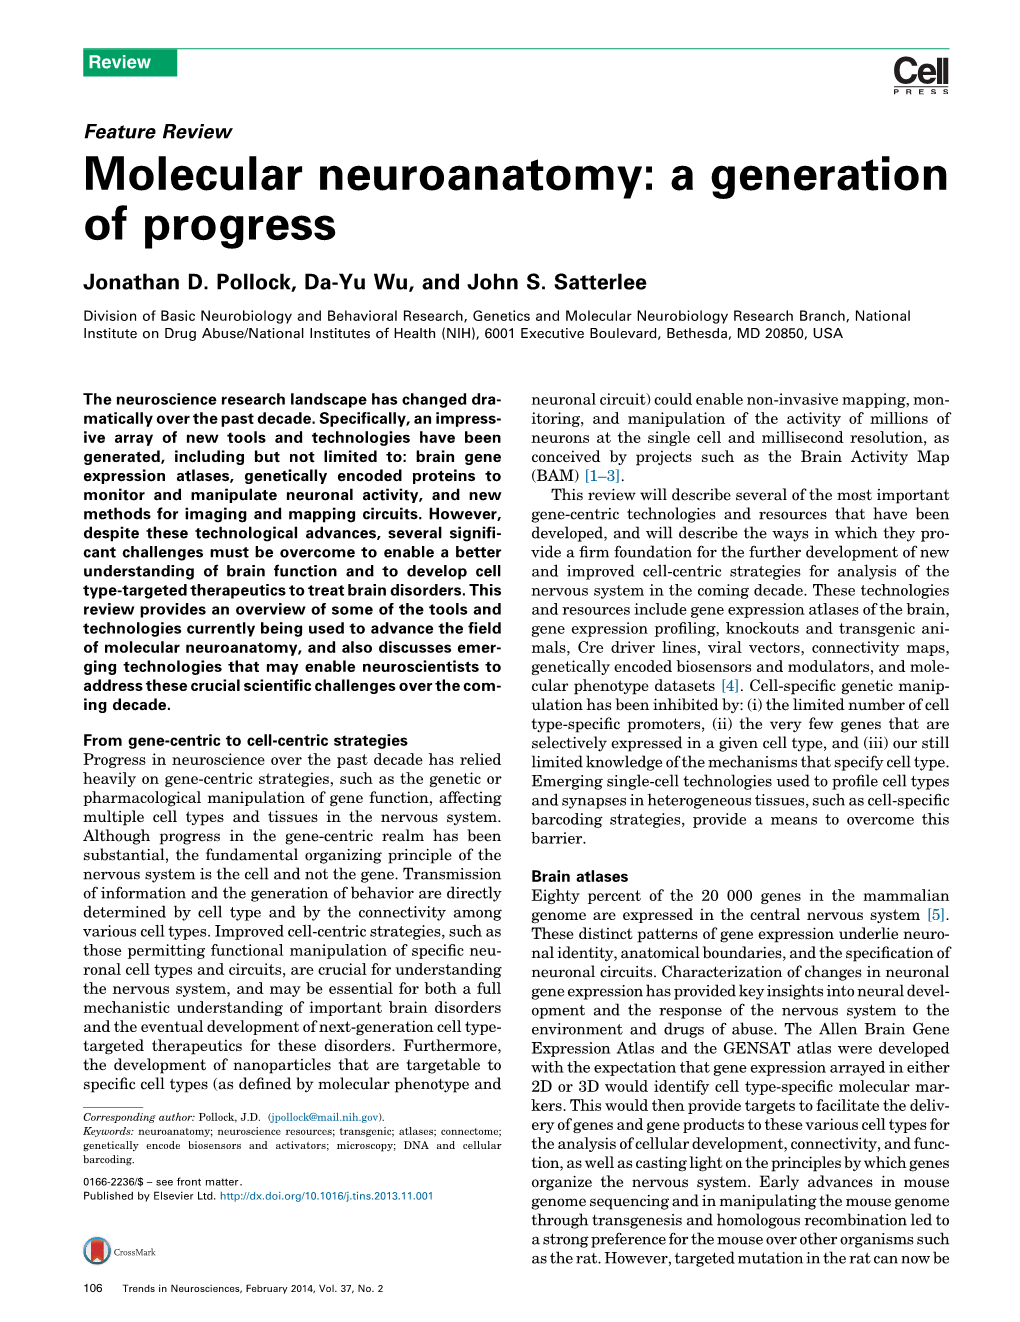 Molecular Neuroanatomy: a Generation of Progress